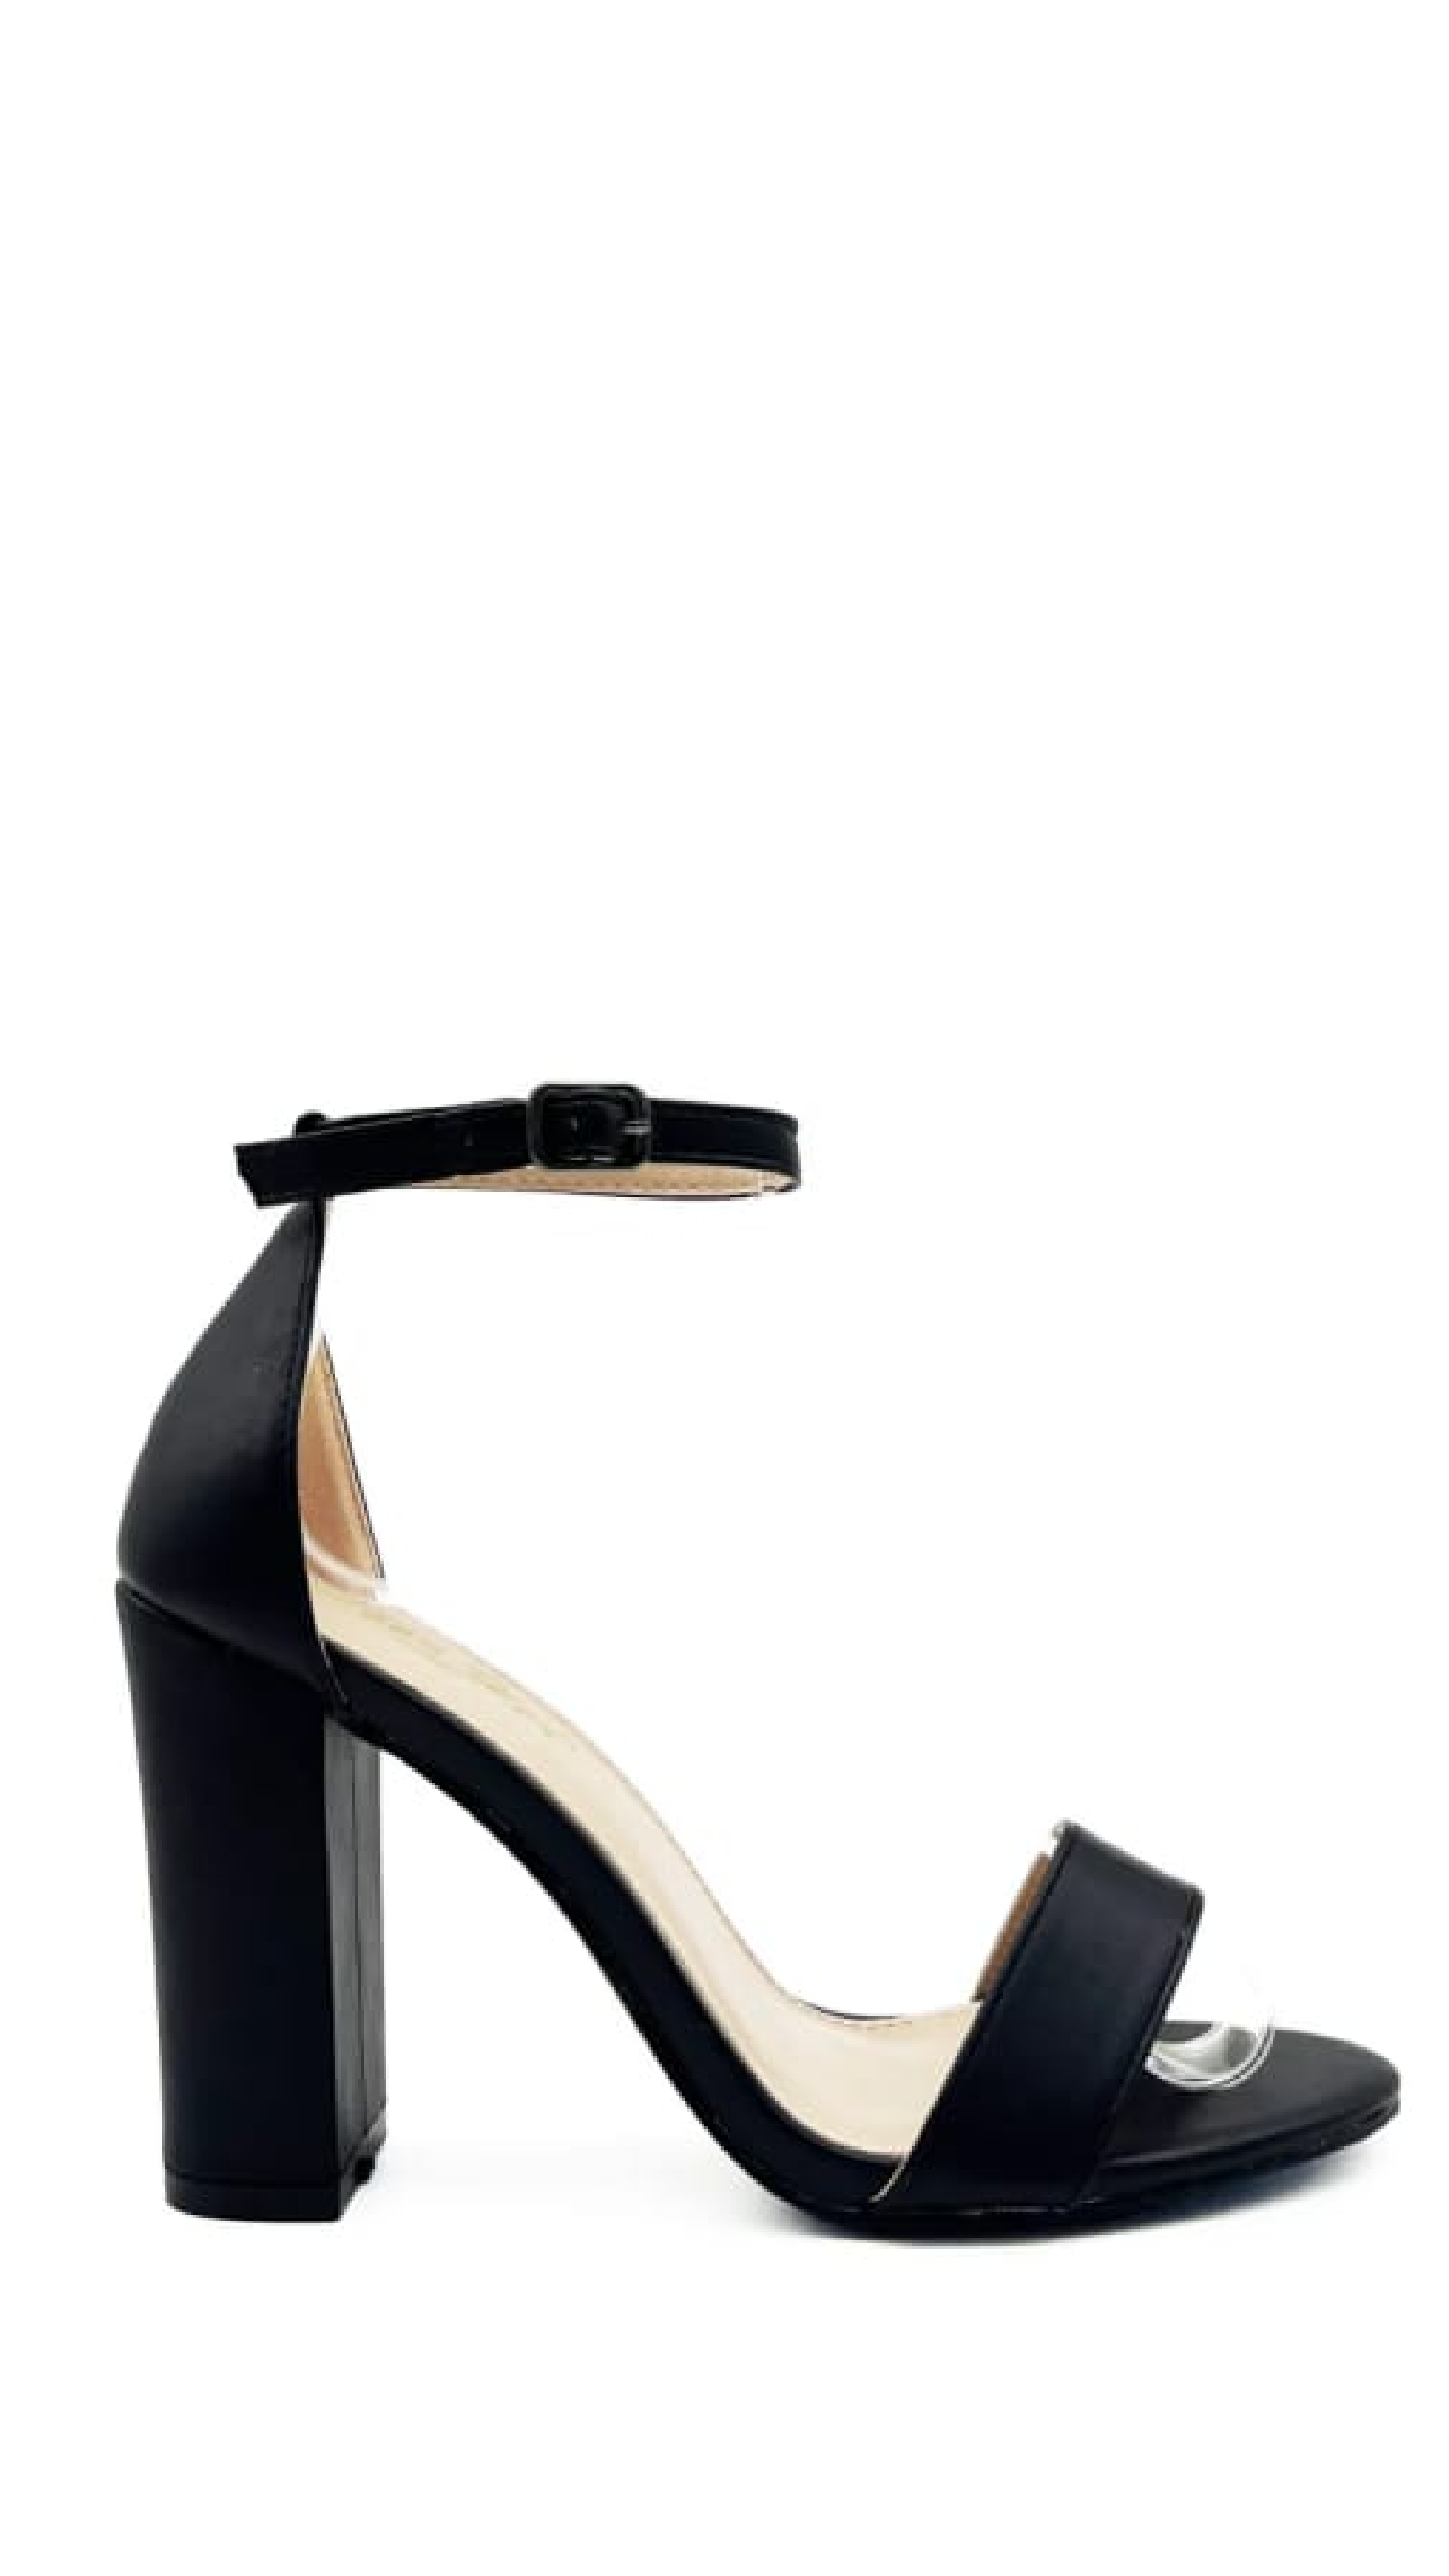 Ciara Black Strap Sandals